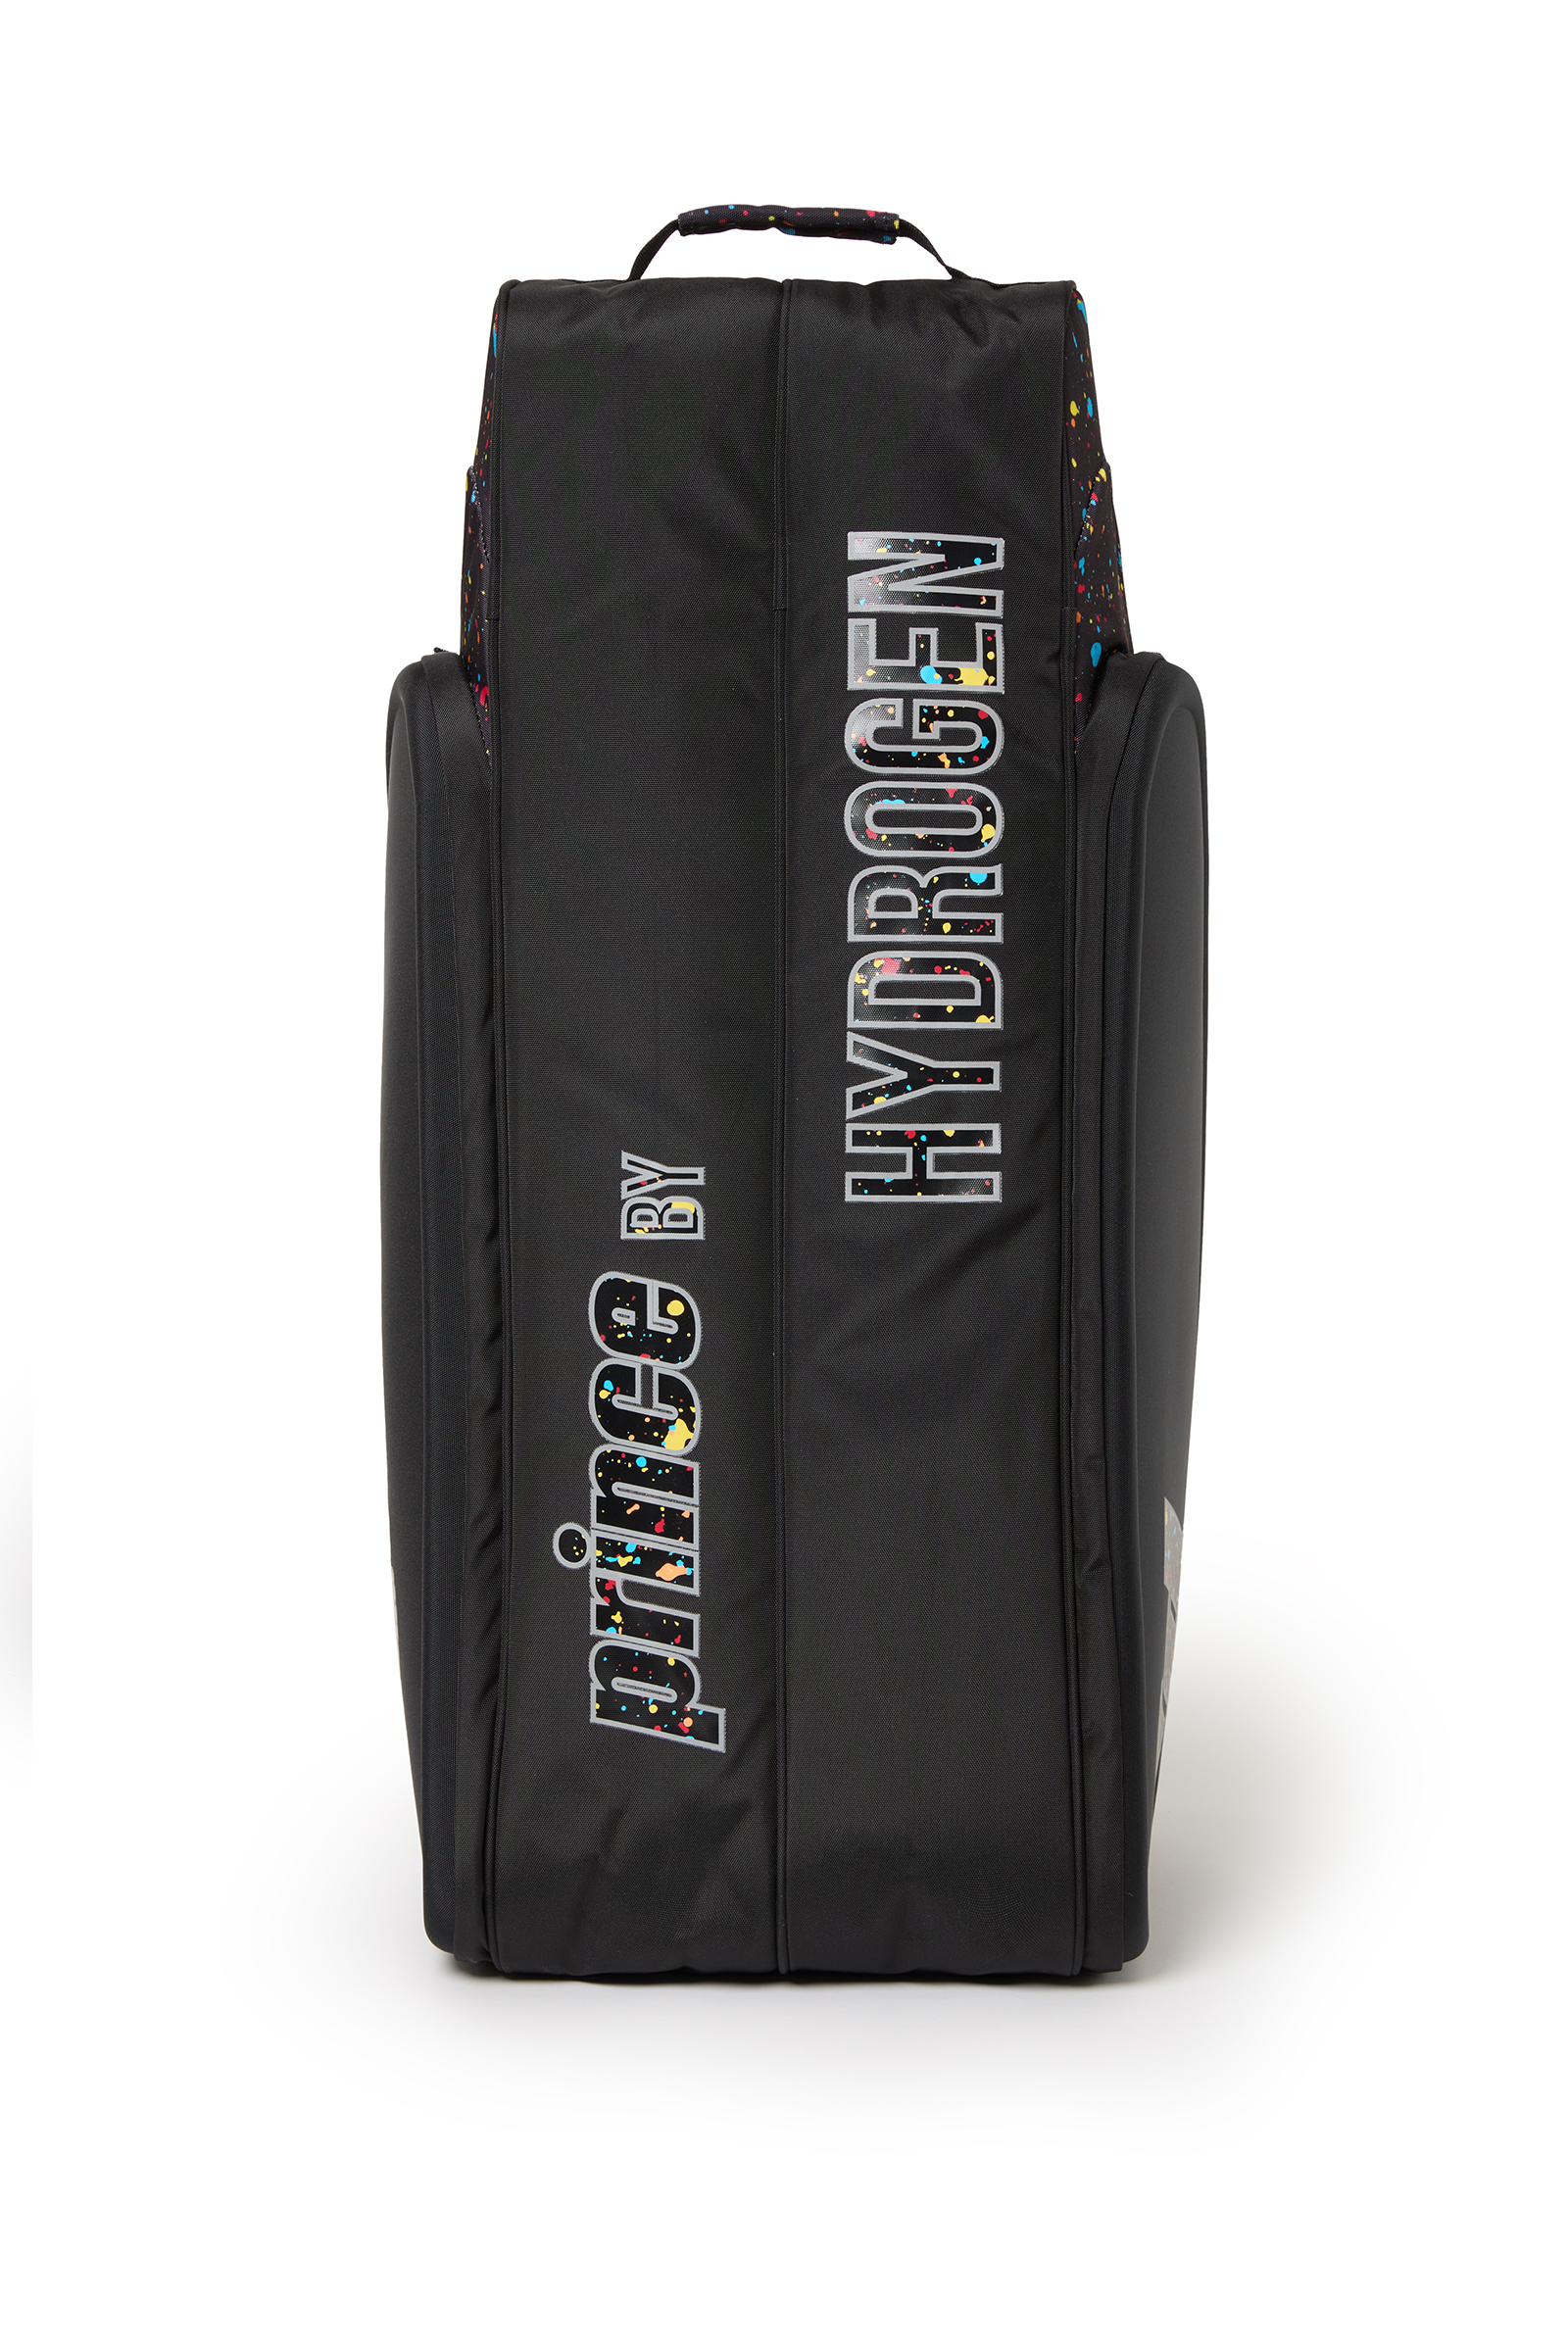 SPARK RACKETS BAG BIG PRINCE BY HYDROGEN - Black - Abbigliamento sportivo | Hydrogen